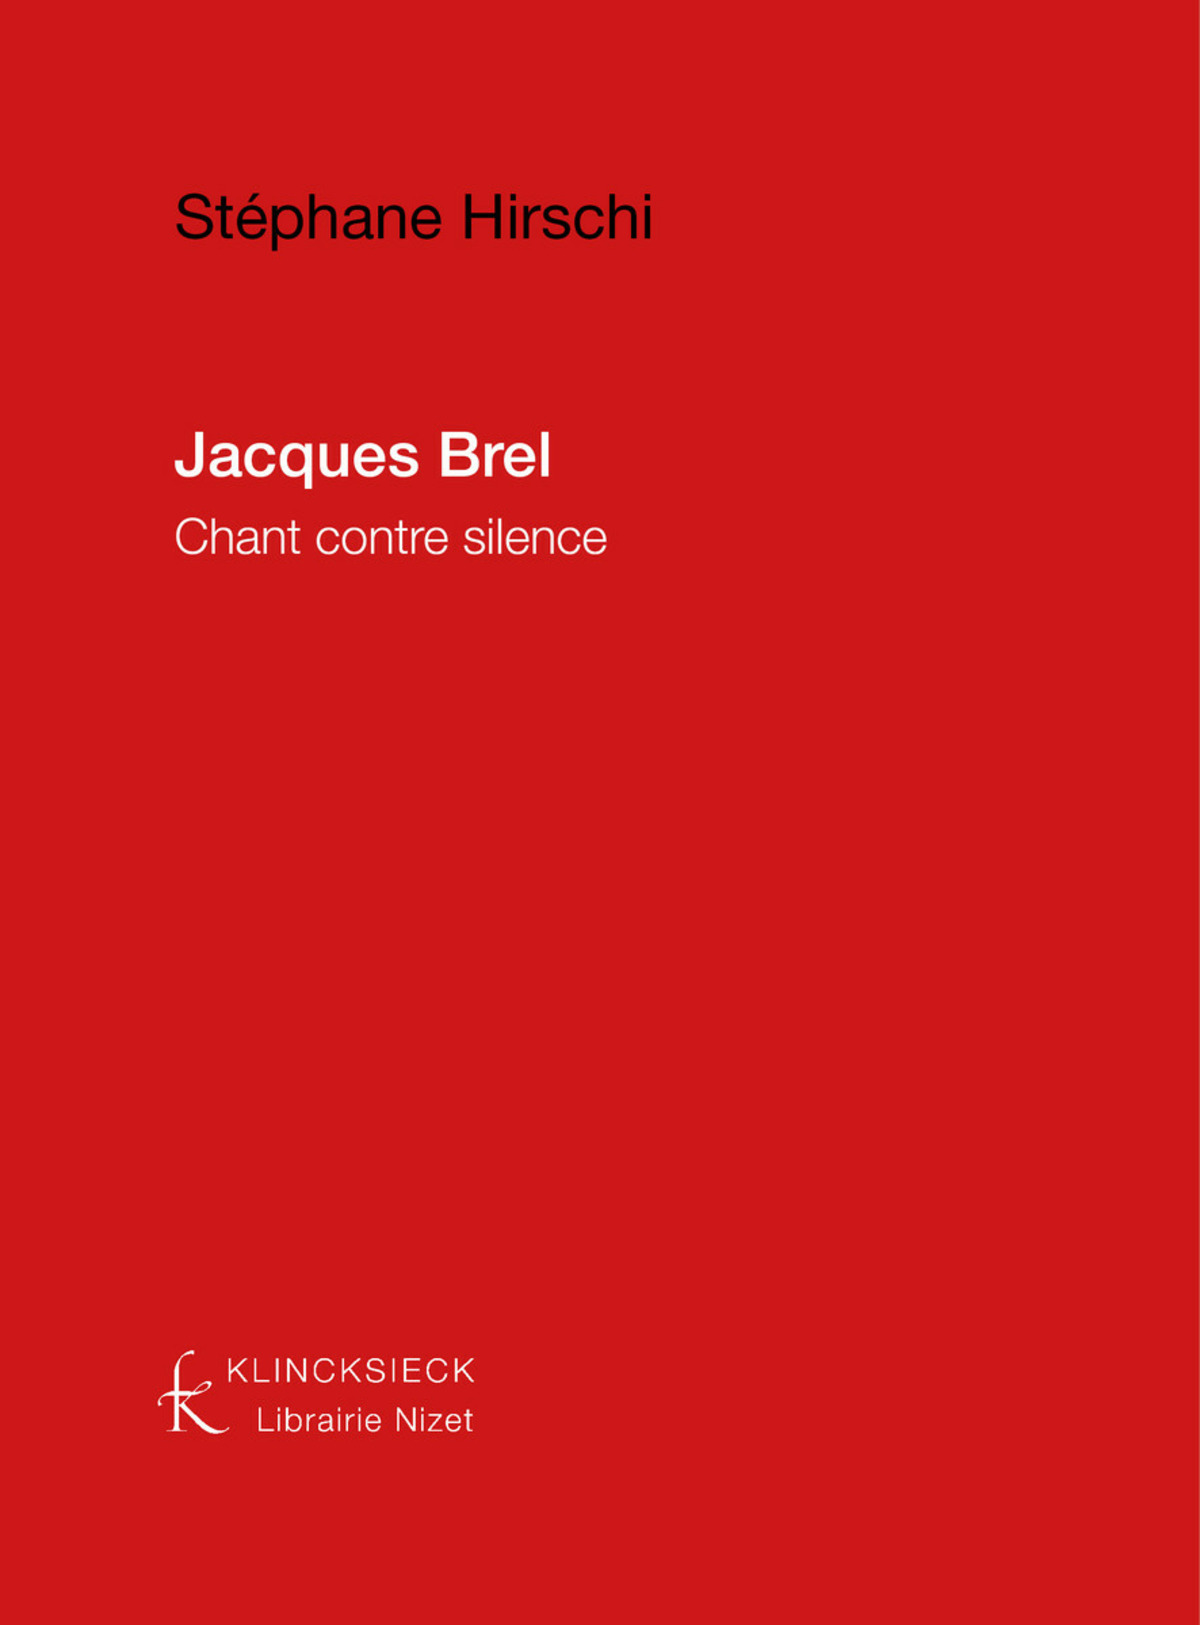 Jacques Brel: Chant contre silence